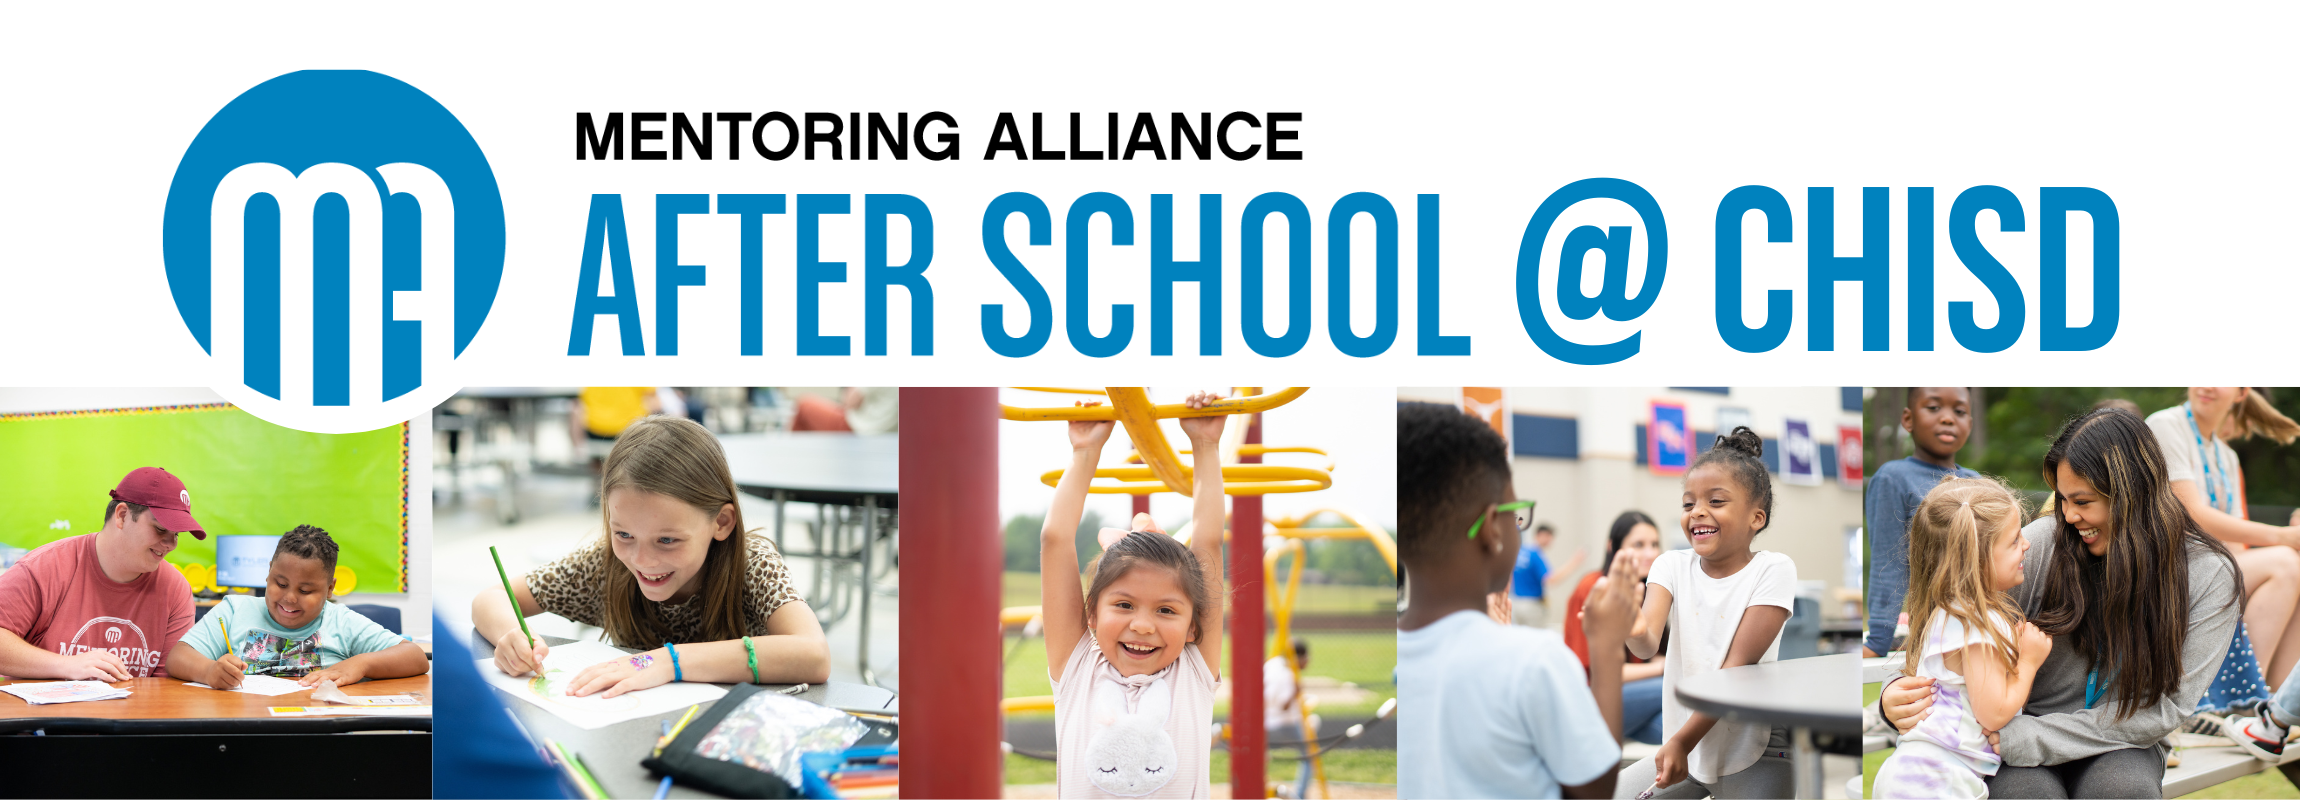 After School Program led by Mentoring Alliance